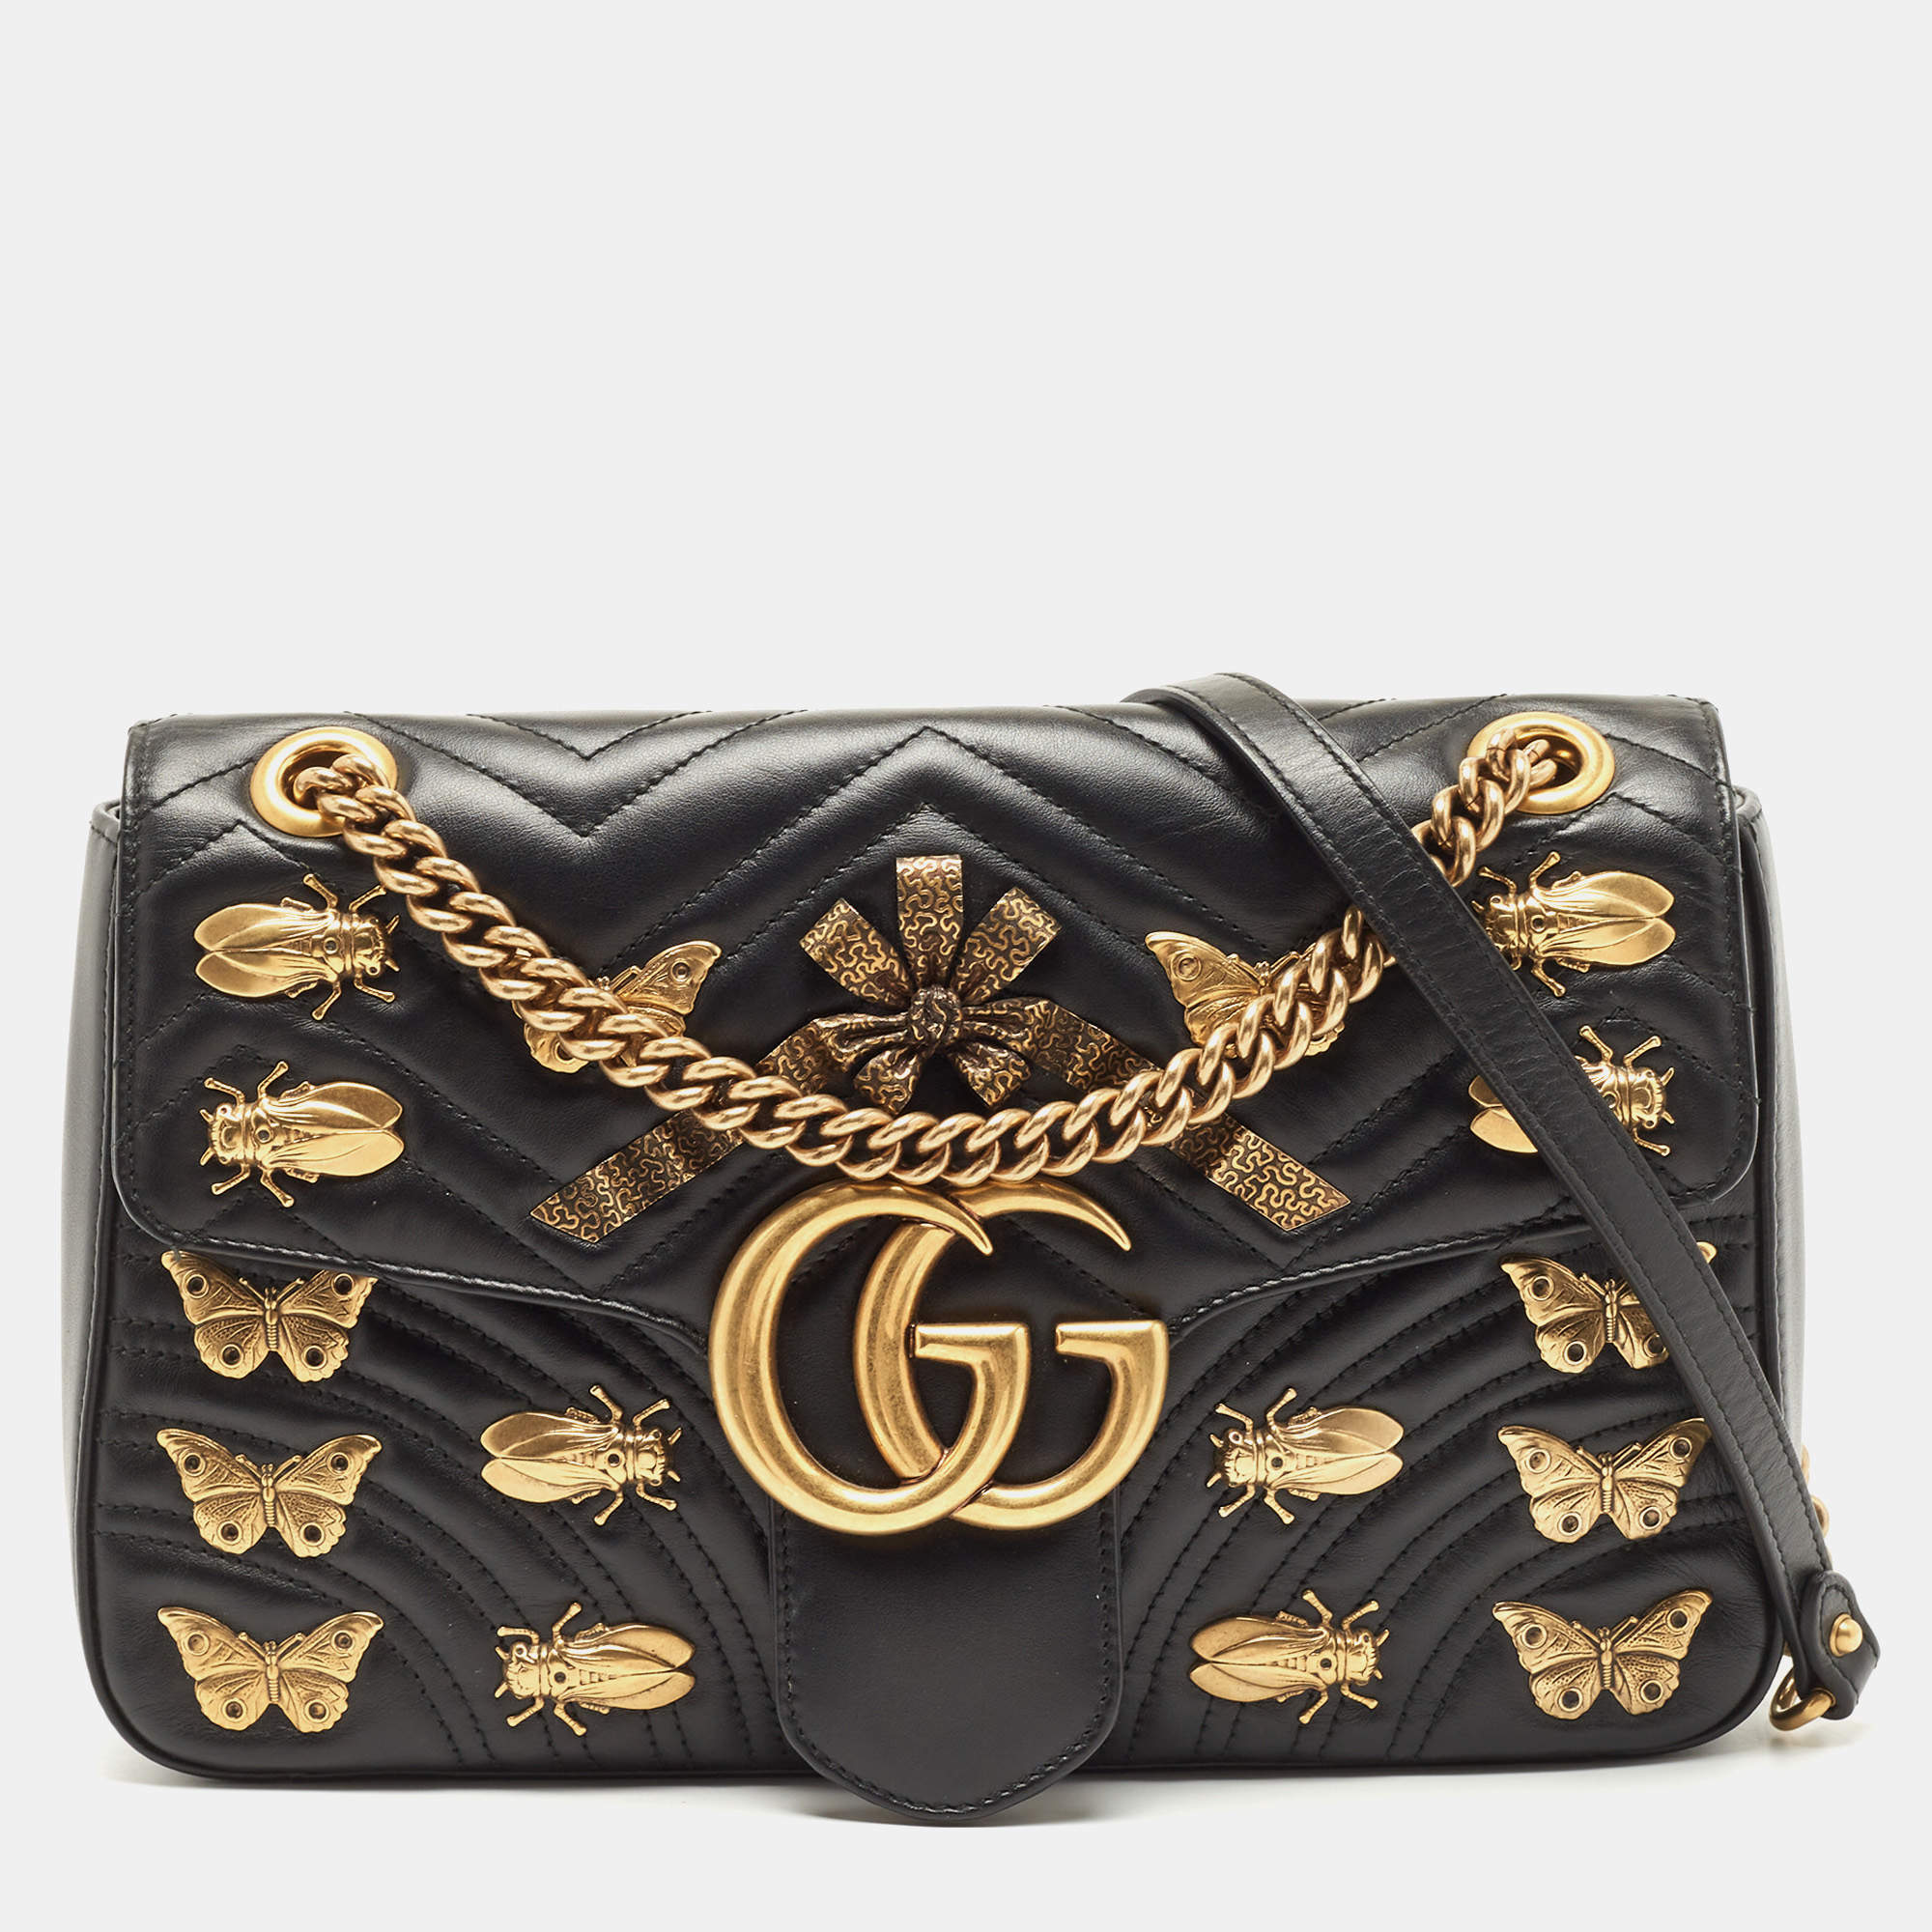 Gucci Black Matelasse Leather Medium GG Marmont Animal Studs Shoulder Bag